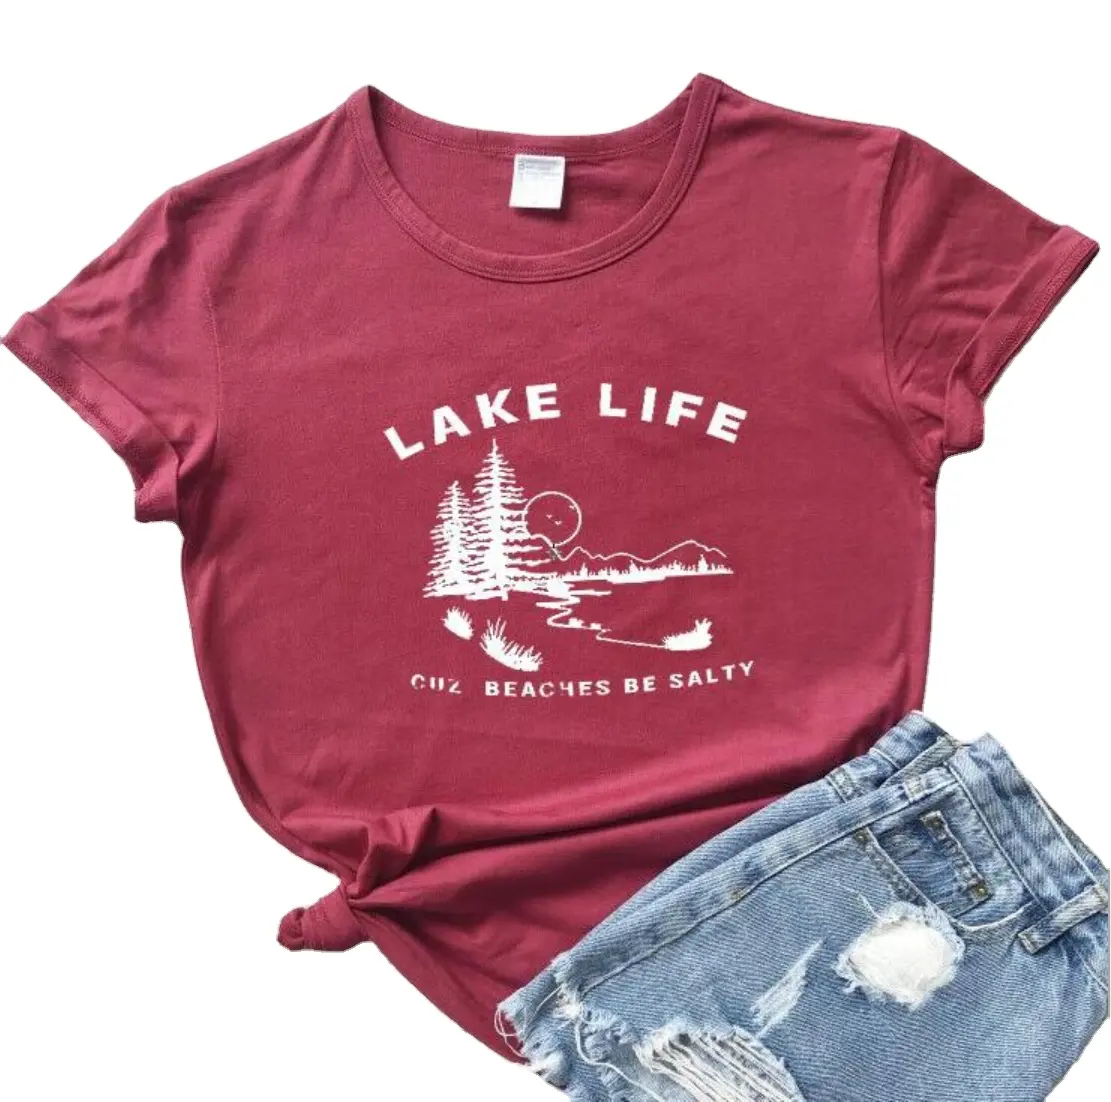 New Women T-Shirt Short Sleeve Lake Life Beaches Be Salty Print O-Neck T-Shirt 2018 Female Casual t shirt Ladies Tops Tee